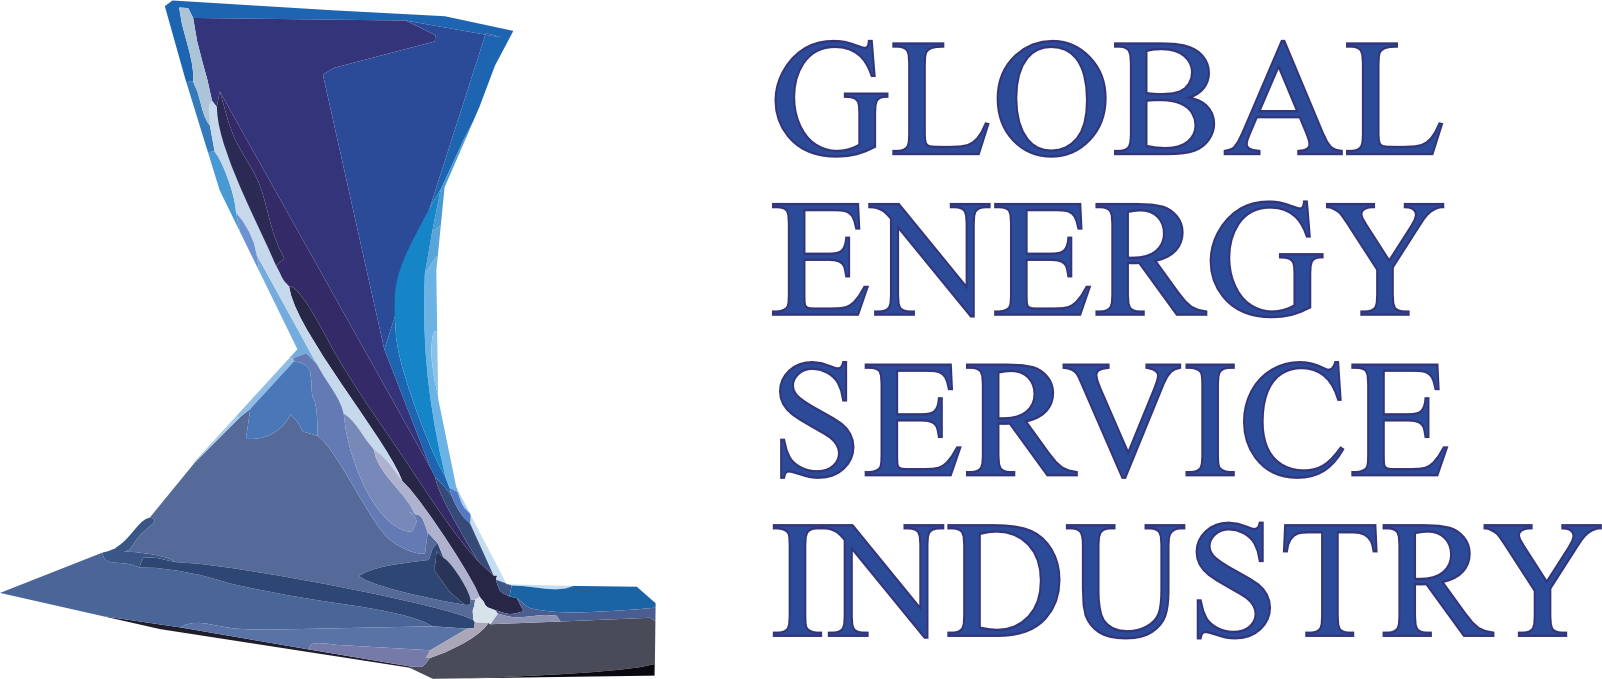 Global Energy Service Industry